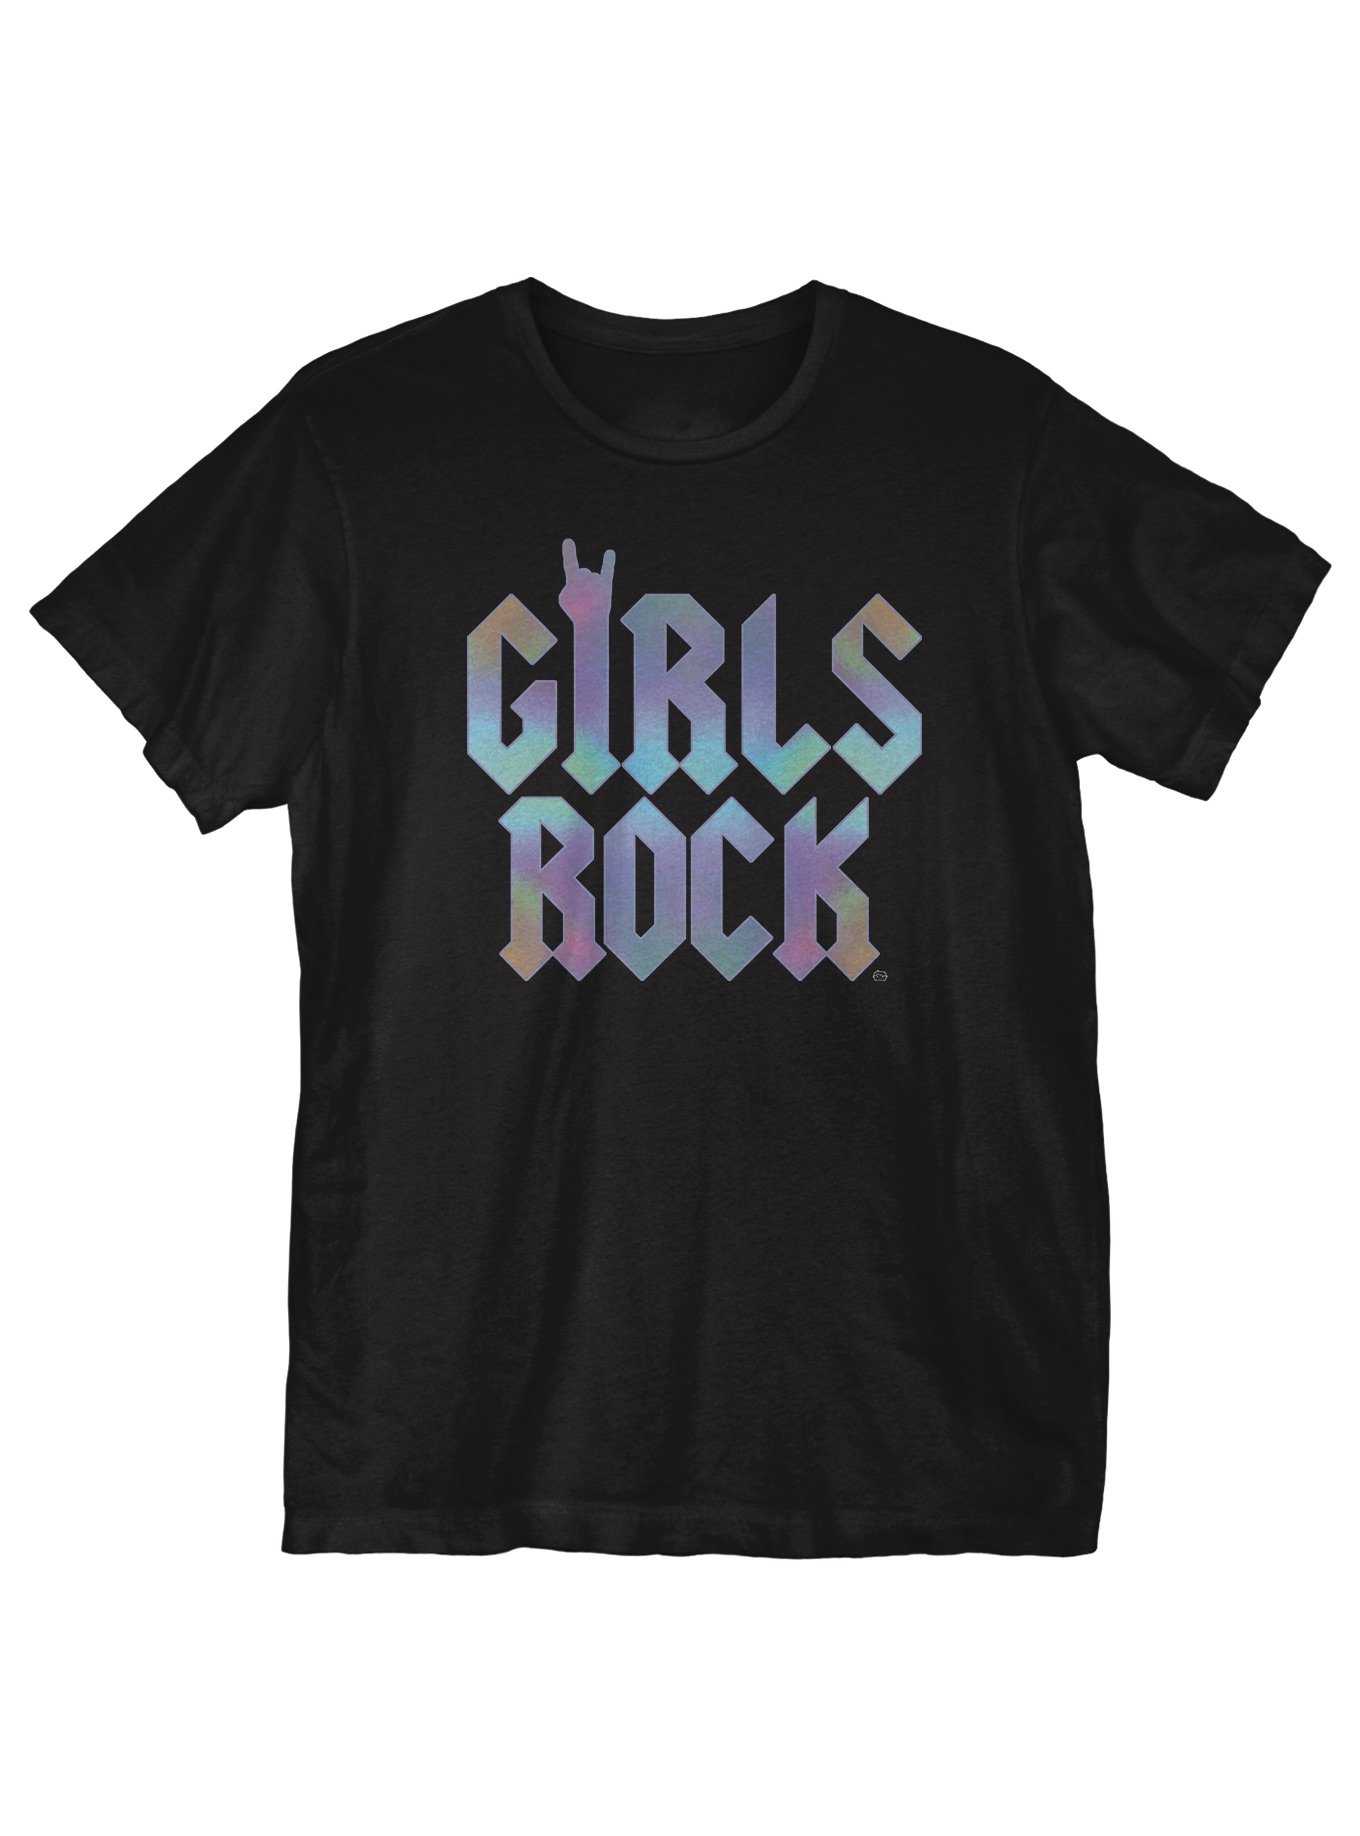 Girls Rock T-Shirt, , hi-res